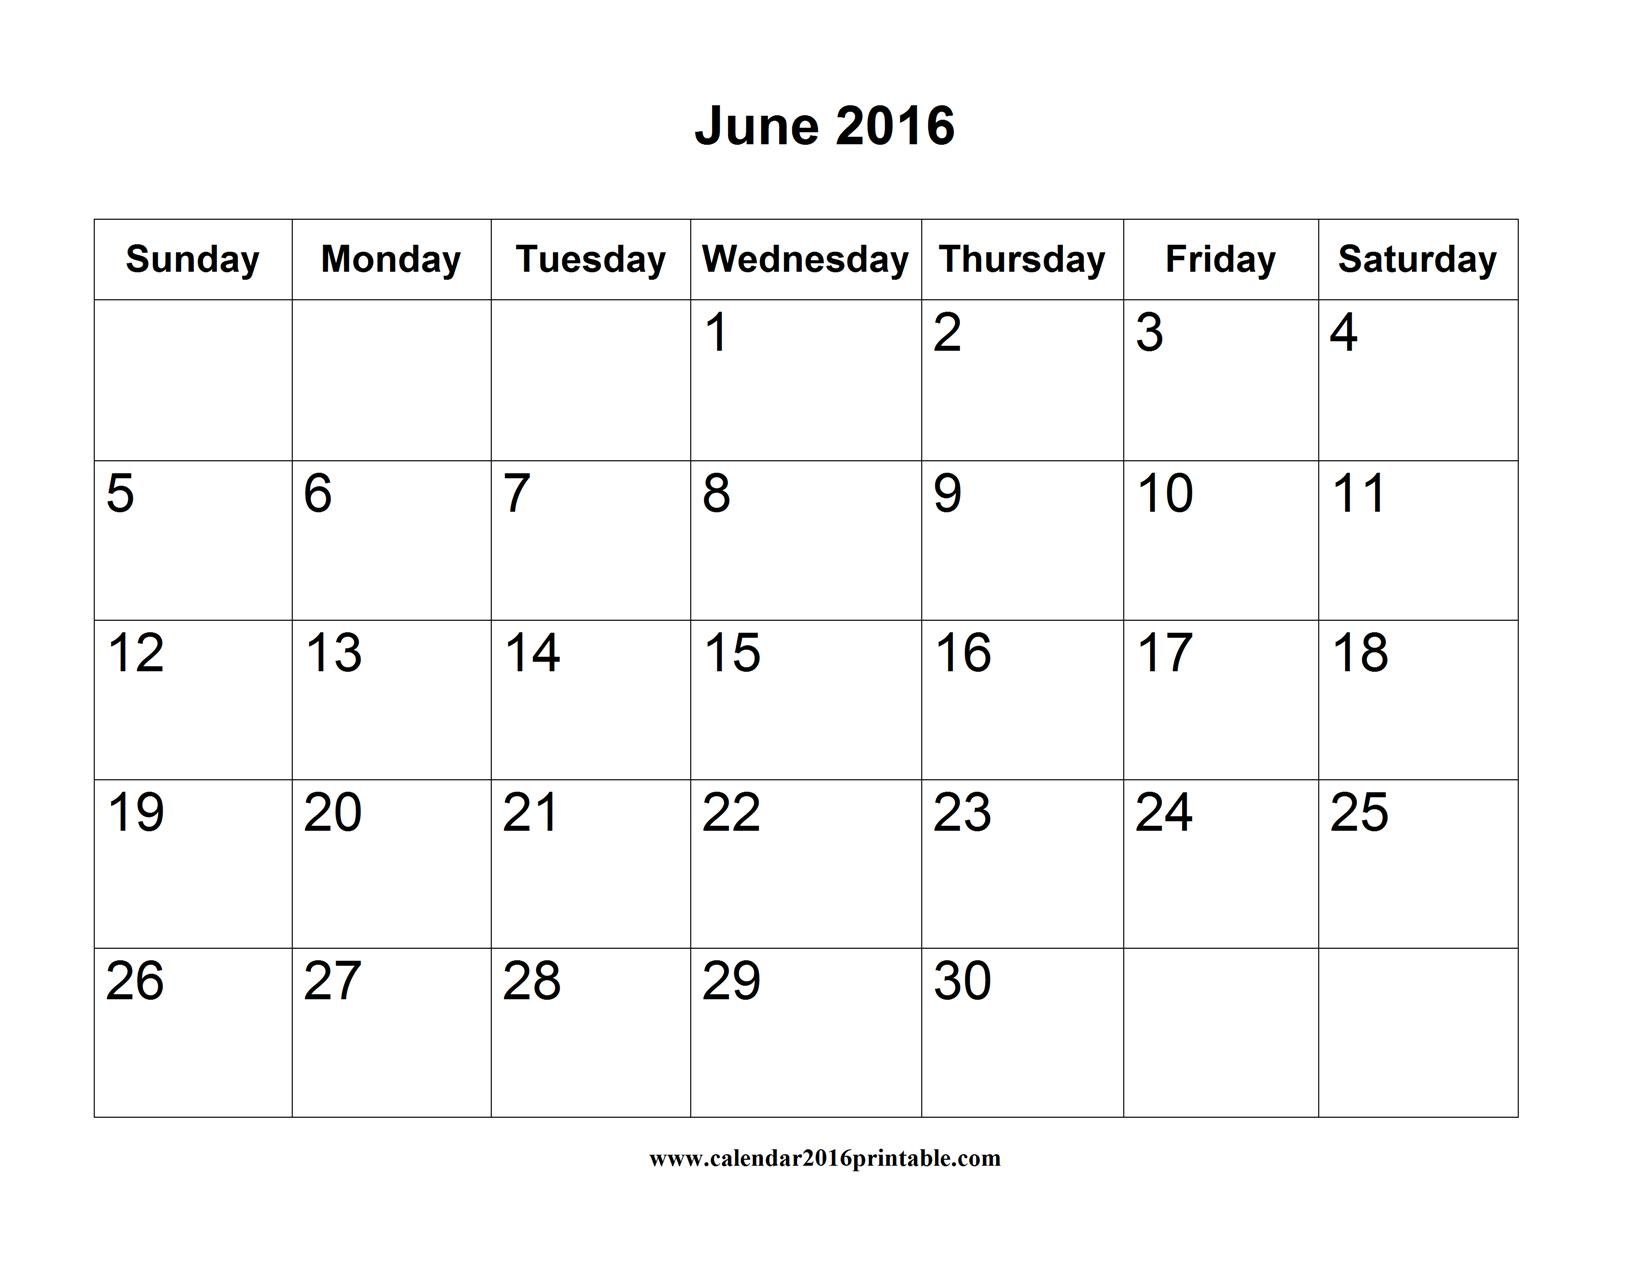 June 2016 Calendar Printable Word, Free To Download And in June 2016 Calendar Printable